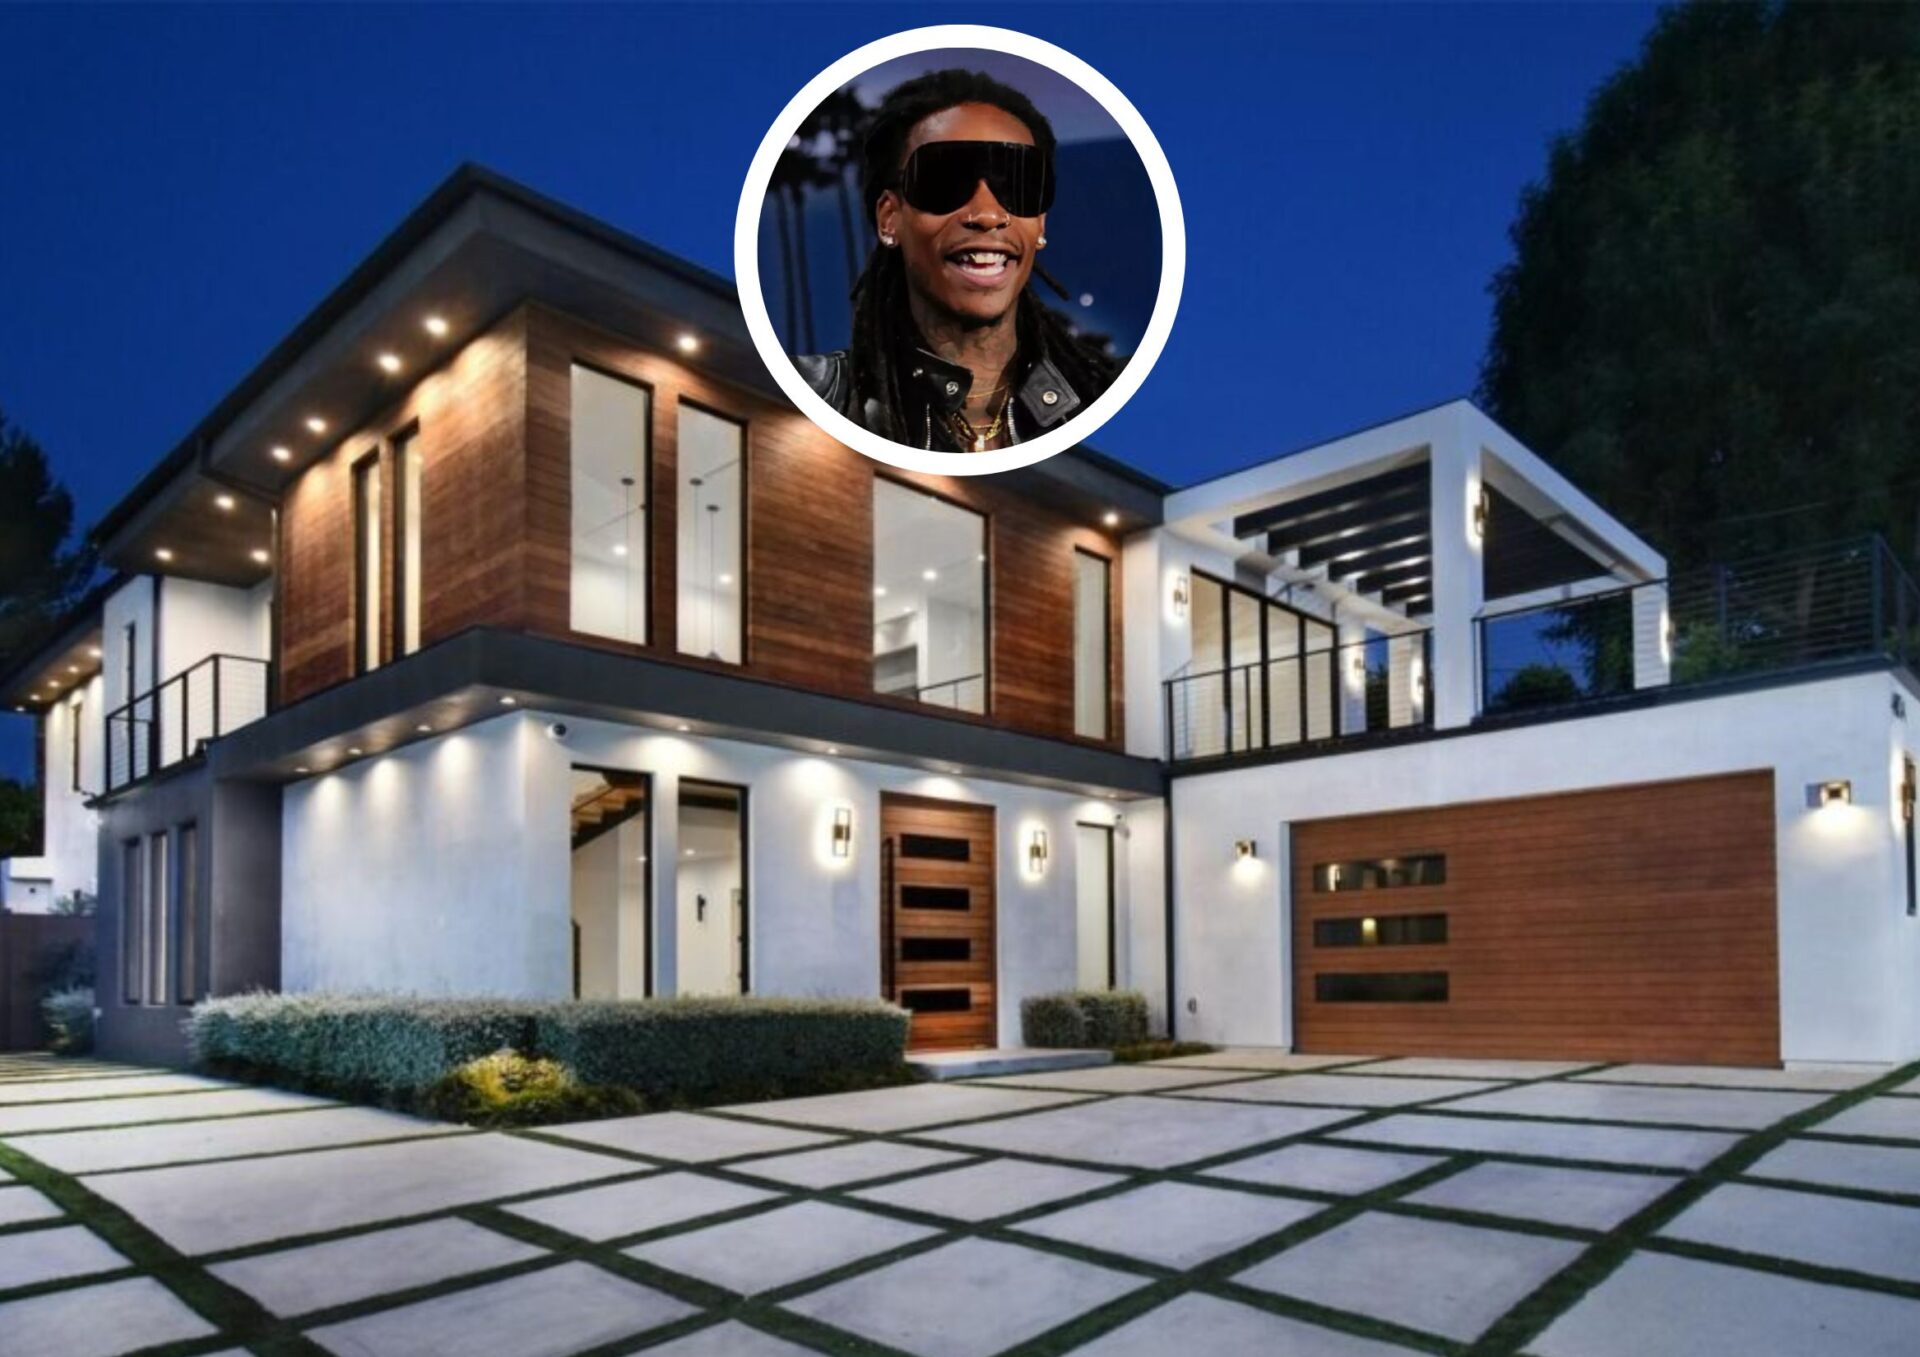 Main Image of Wiz Khalifa's LA Mansion